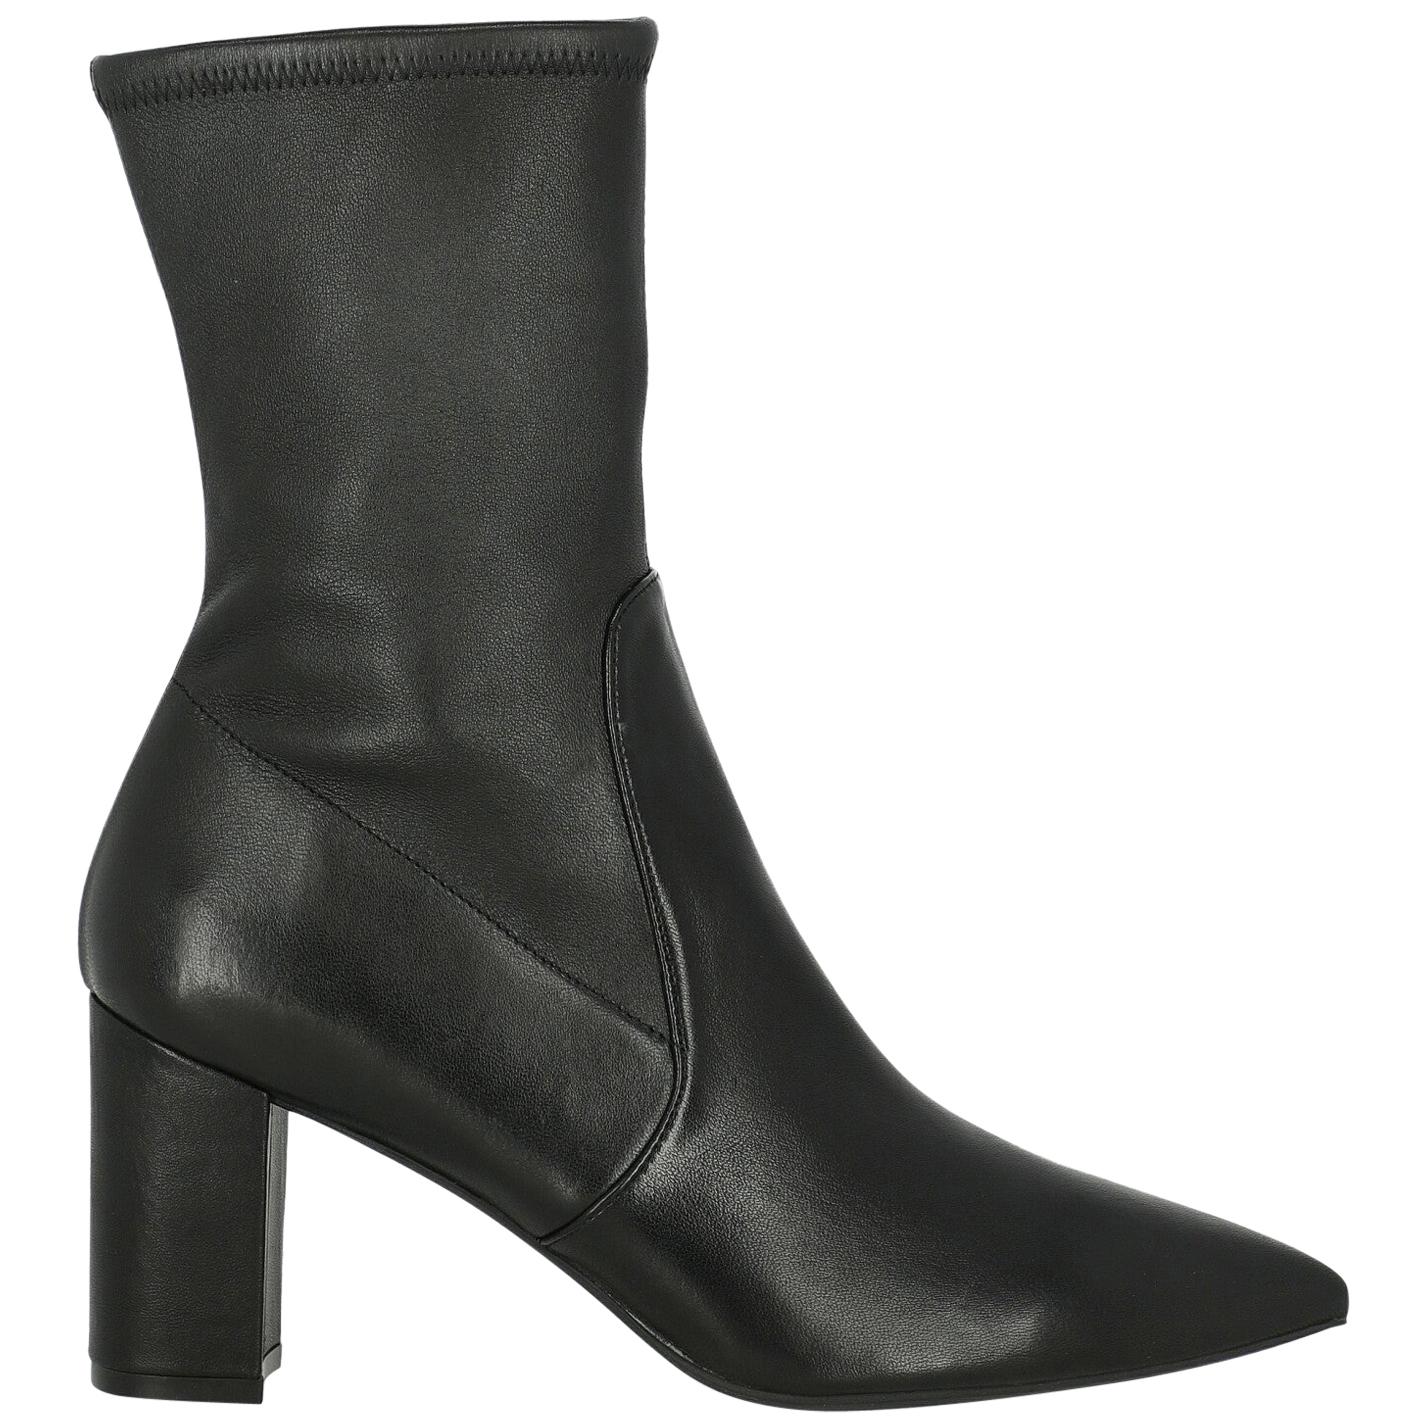 Stuart Weitzman Woman Ankle boots Black Leather IT 40 For Sale